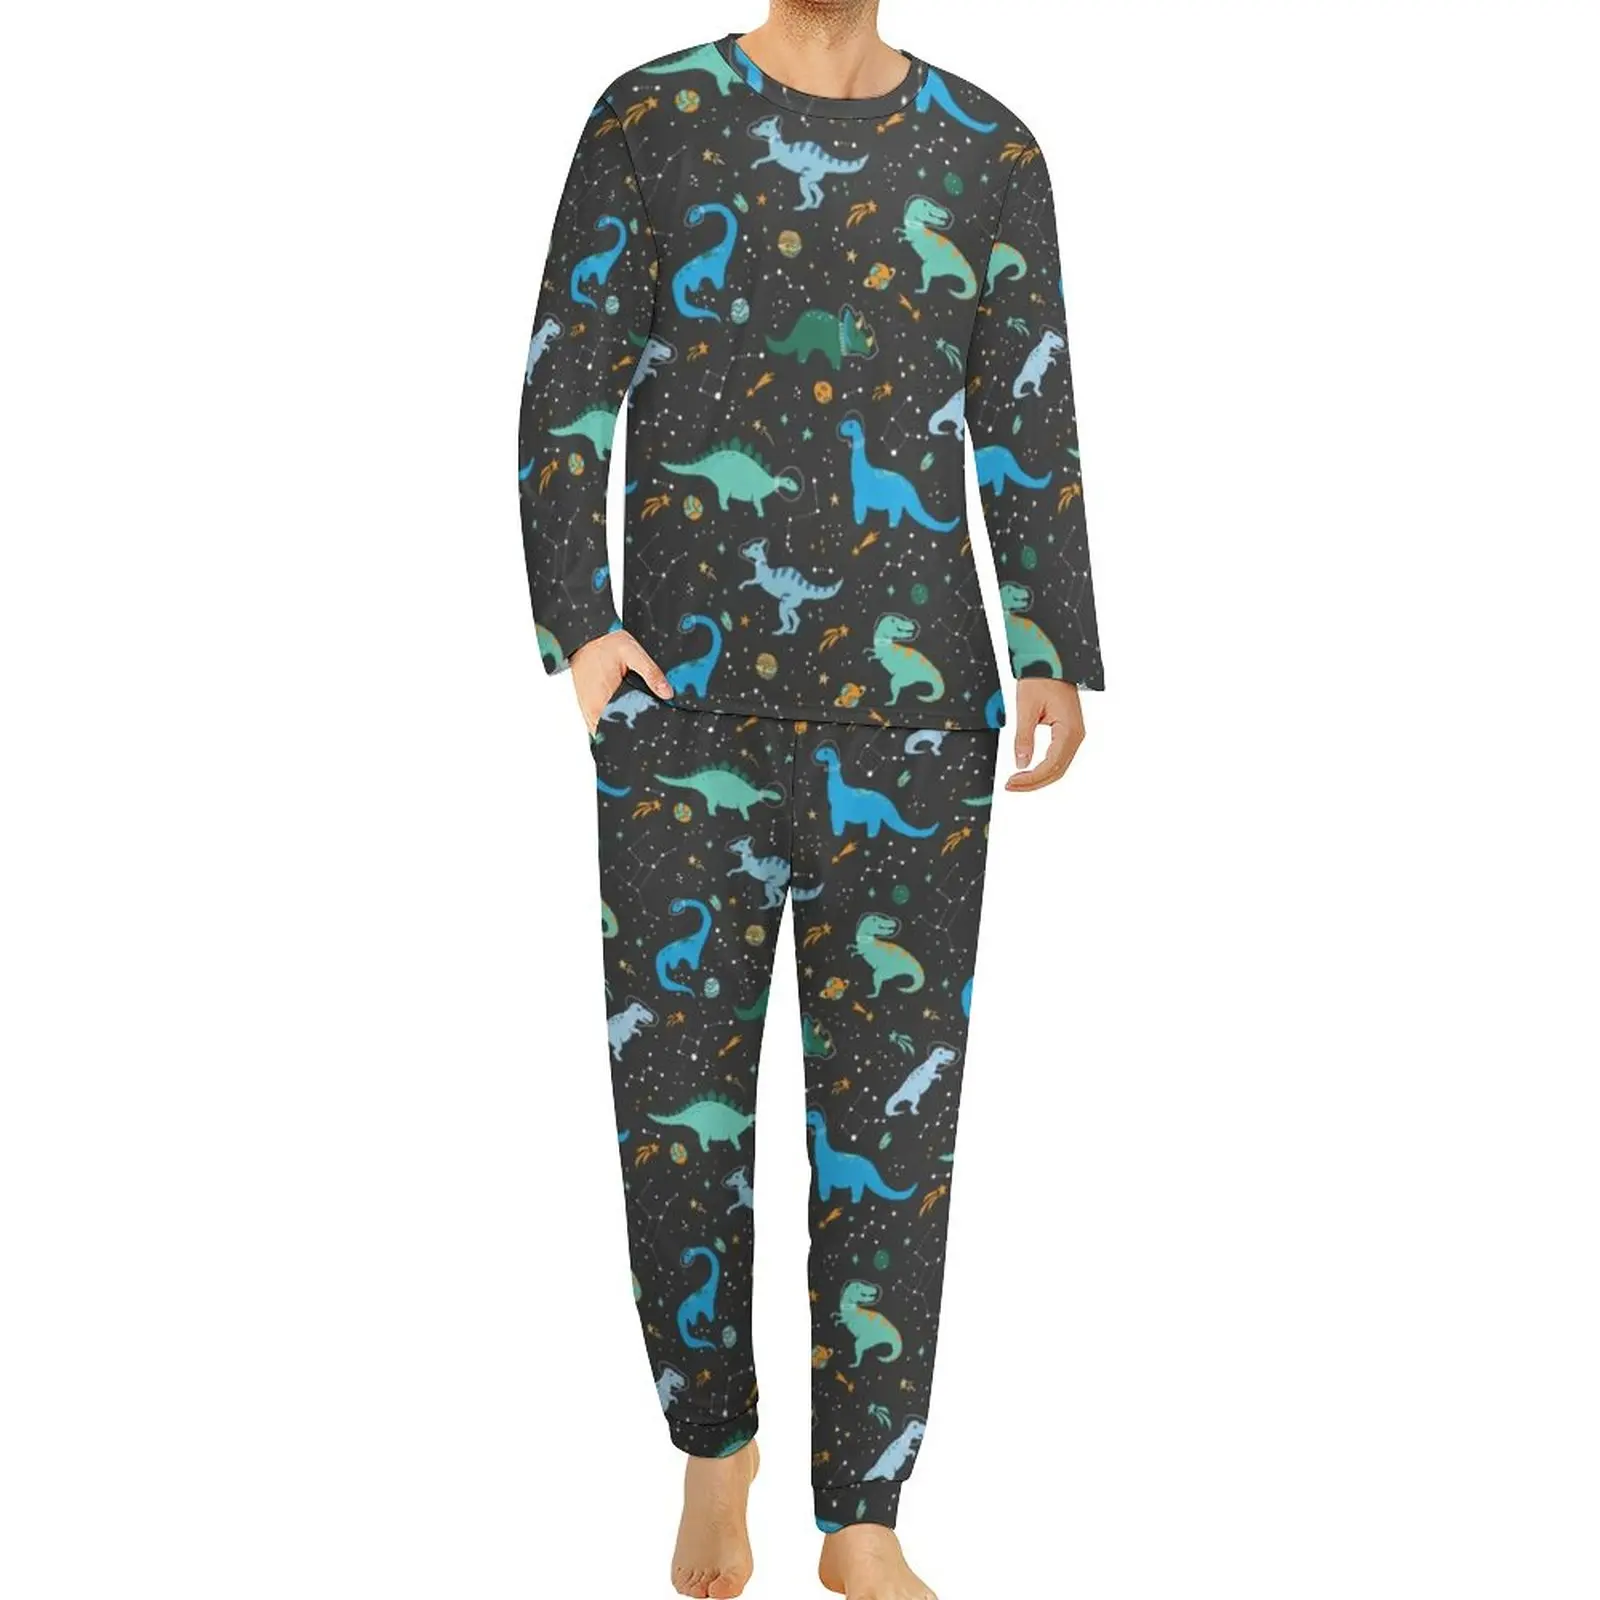 Space Dinosaur Pajamas Men Cute Animal Print Kawaii Sleepwear Daily Long Sleeve 2 Pieces Bedroom Pajama Sets Big Size 4XL 5XL